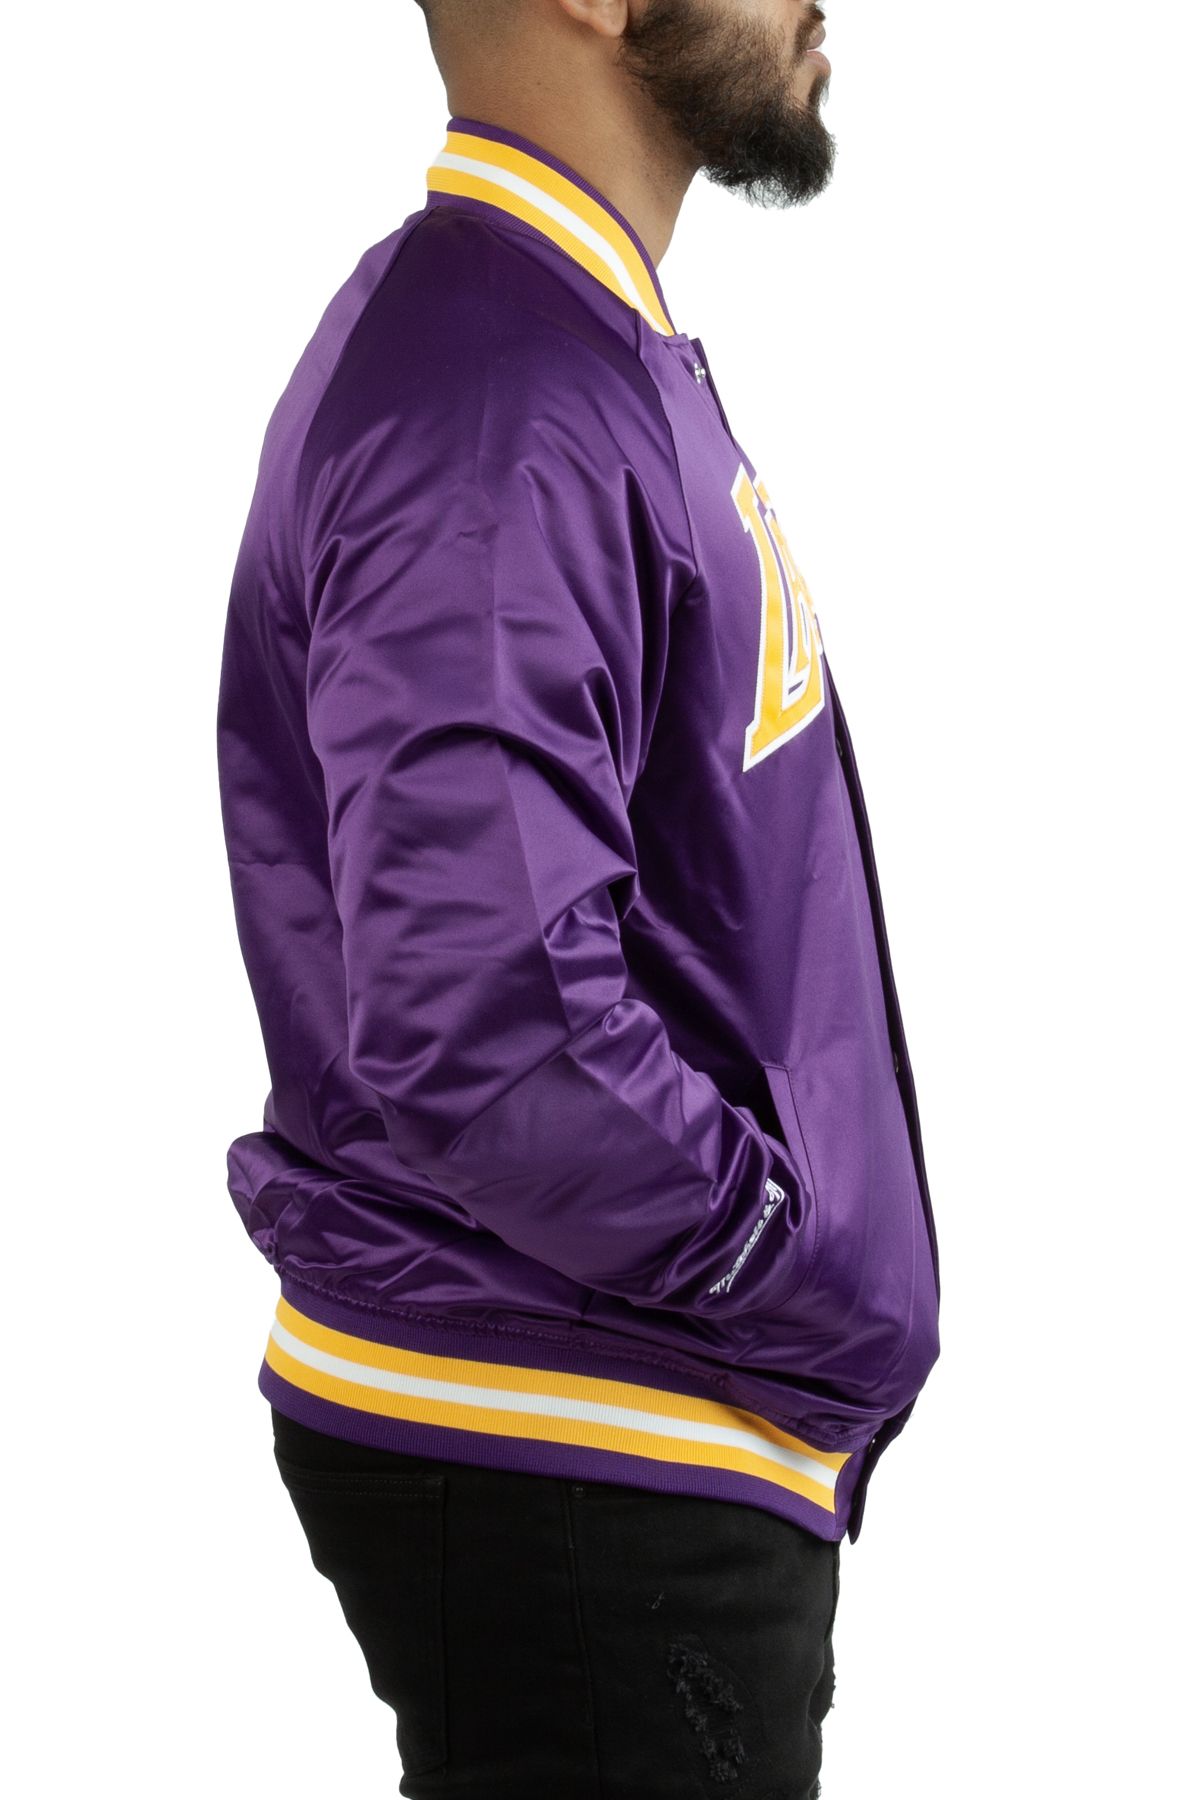 Los Angeles Lakers Mitchell & Ness Boys Youth Satin Jacket Black